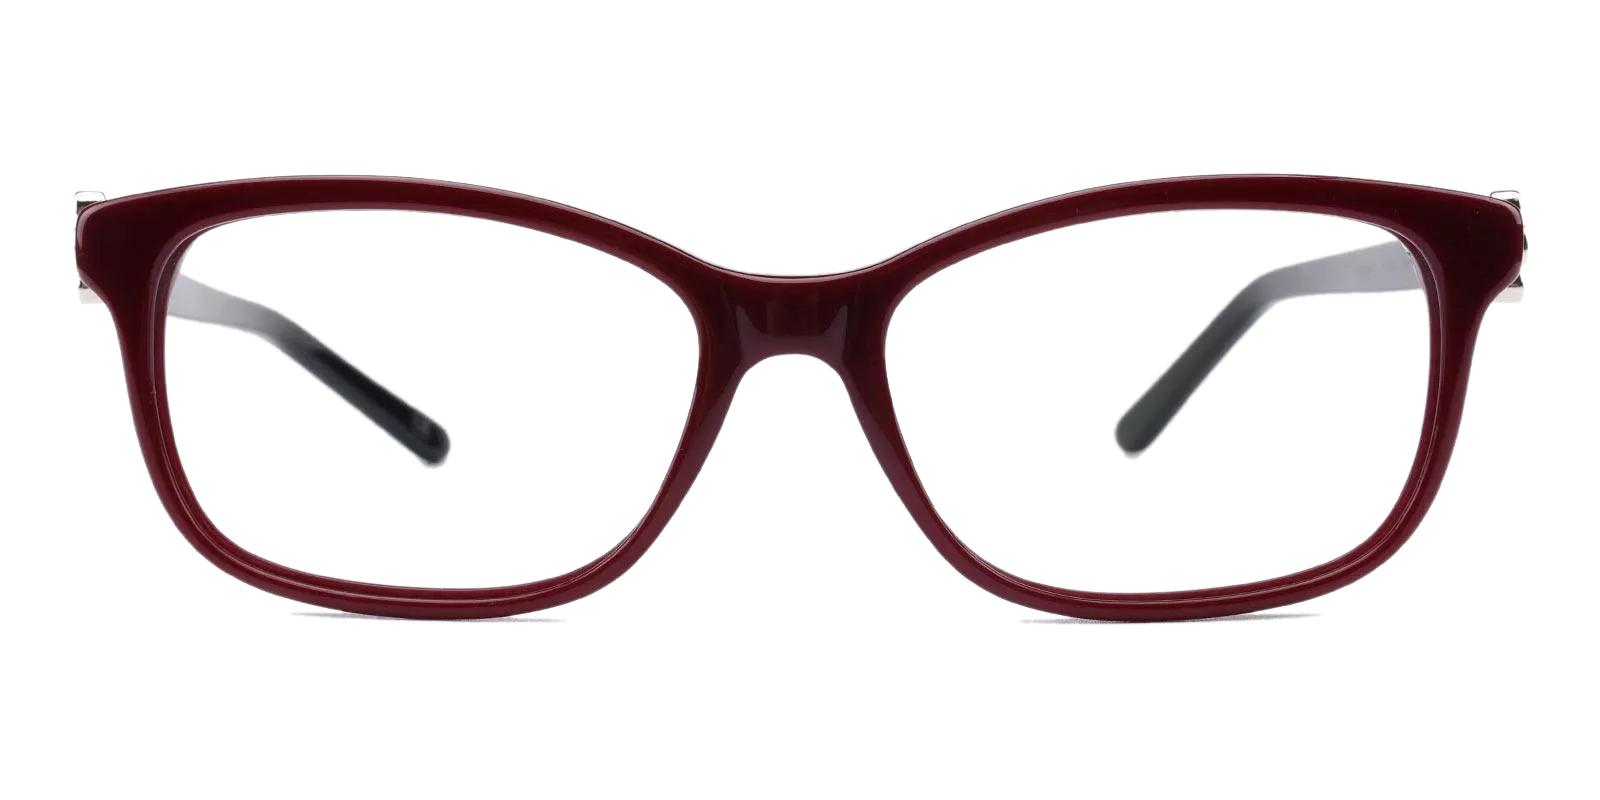 Paula Red Acetate Eyeglasses , Fashion , UniversalBridgeFit Frames from ABBE Glasses